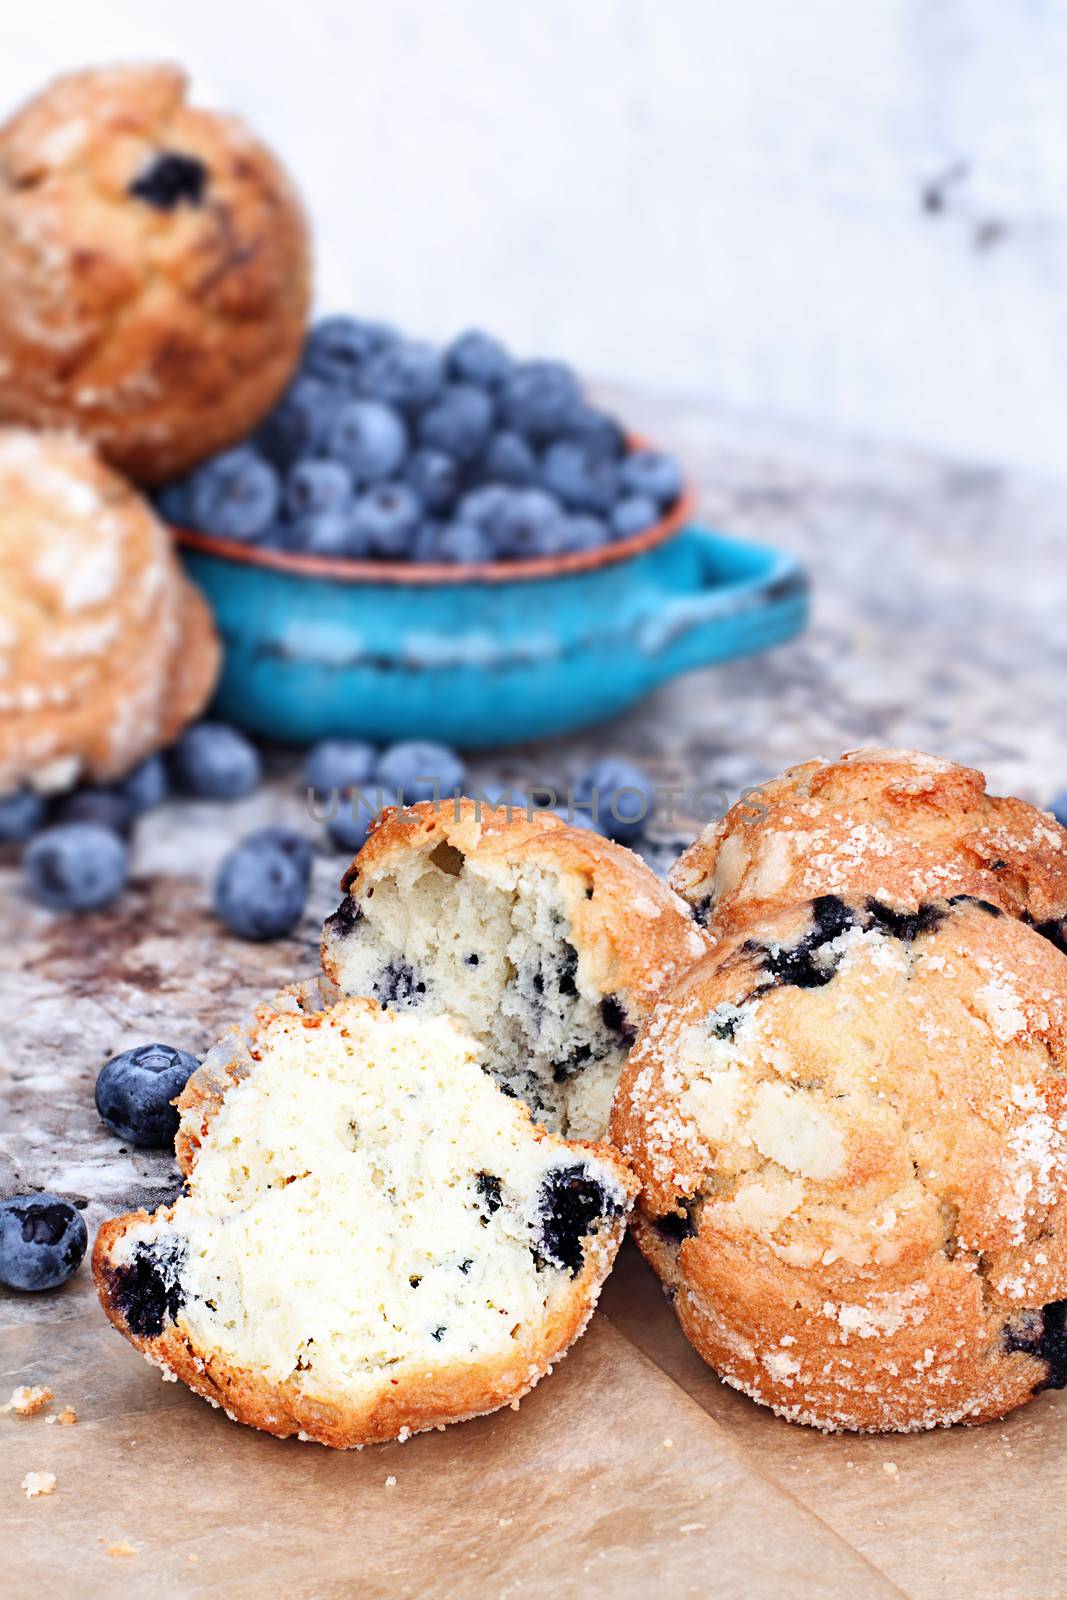 Broken Blueberry Muffins by StephanieFrey